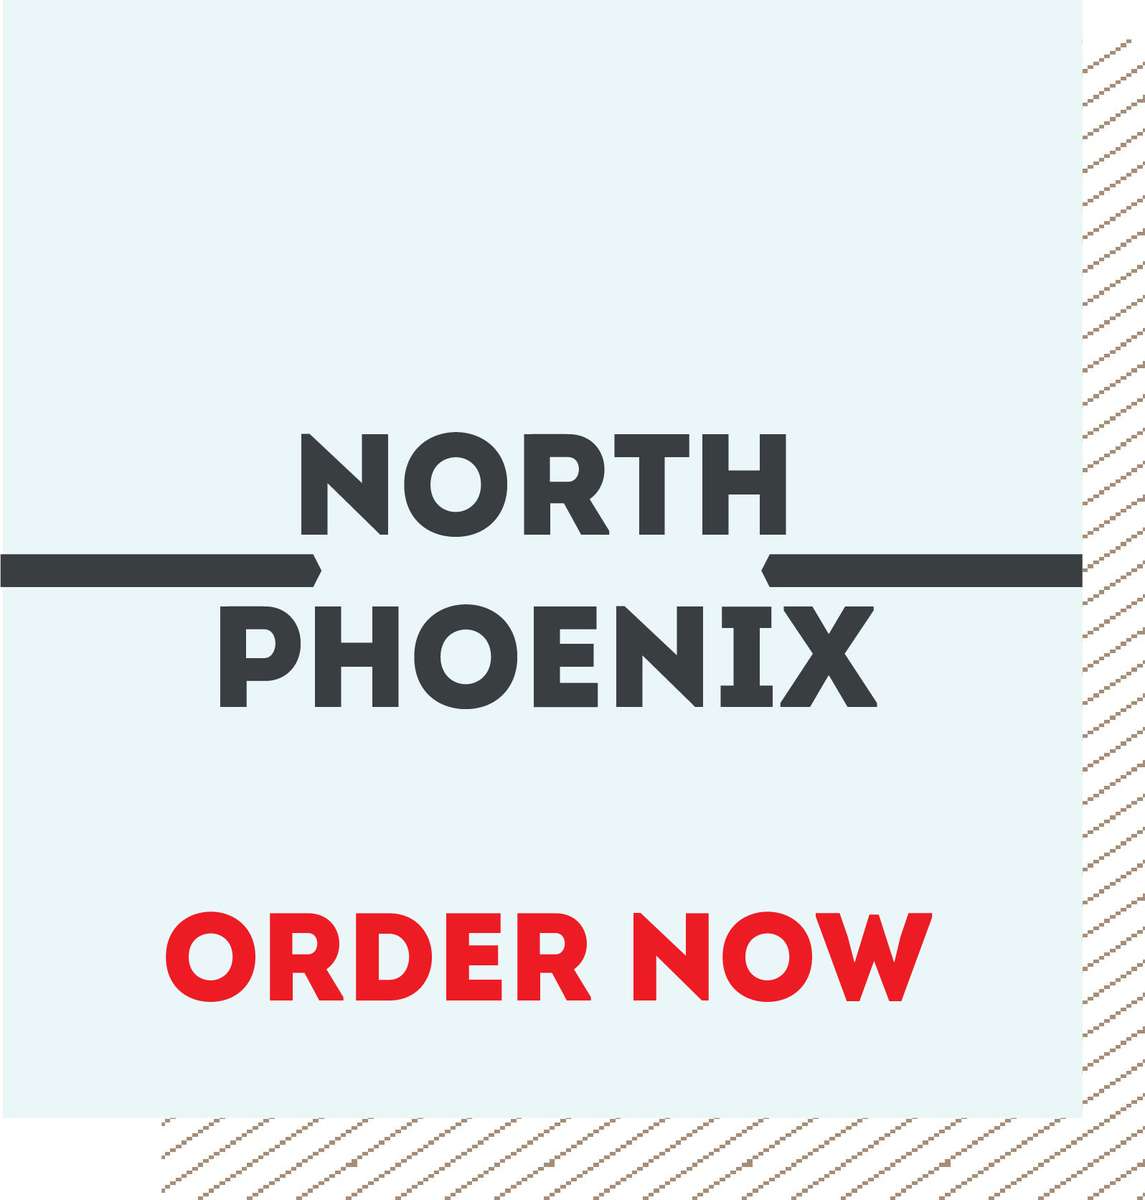 North Phoenix. Order now.